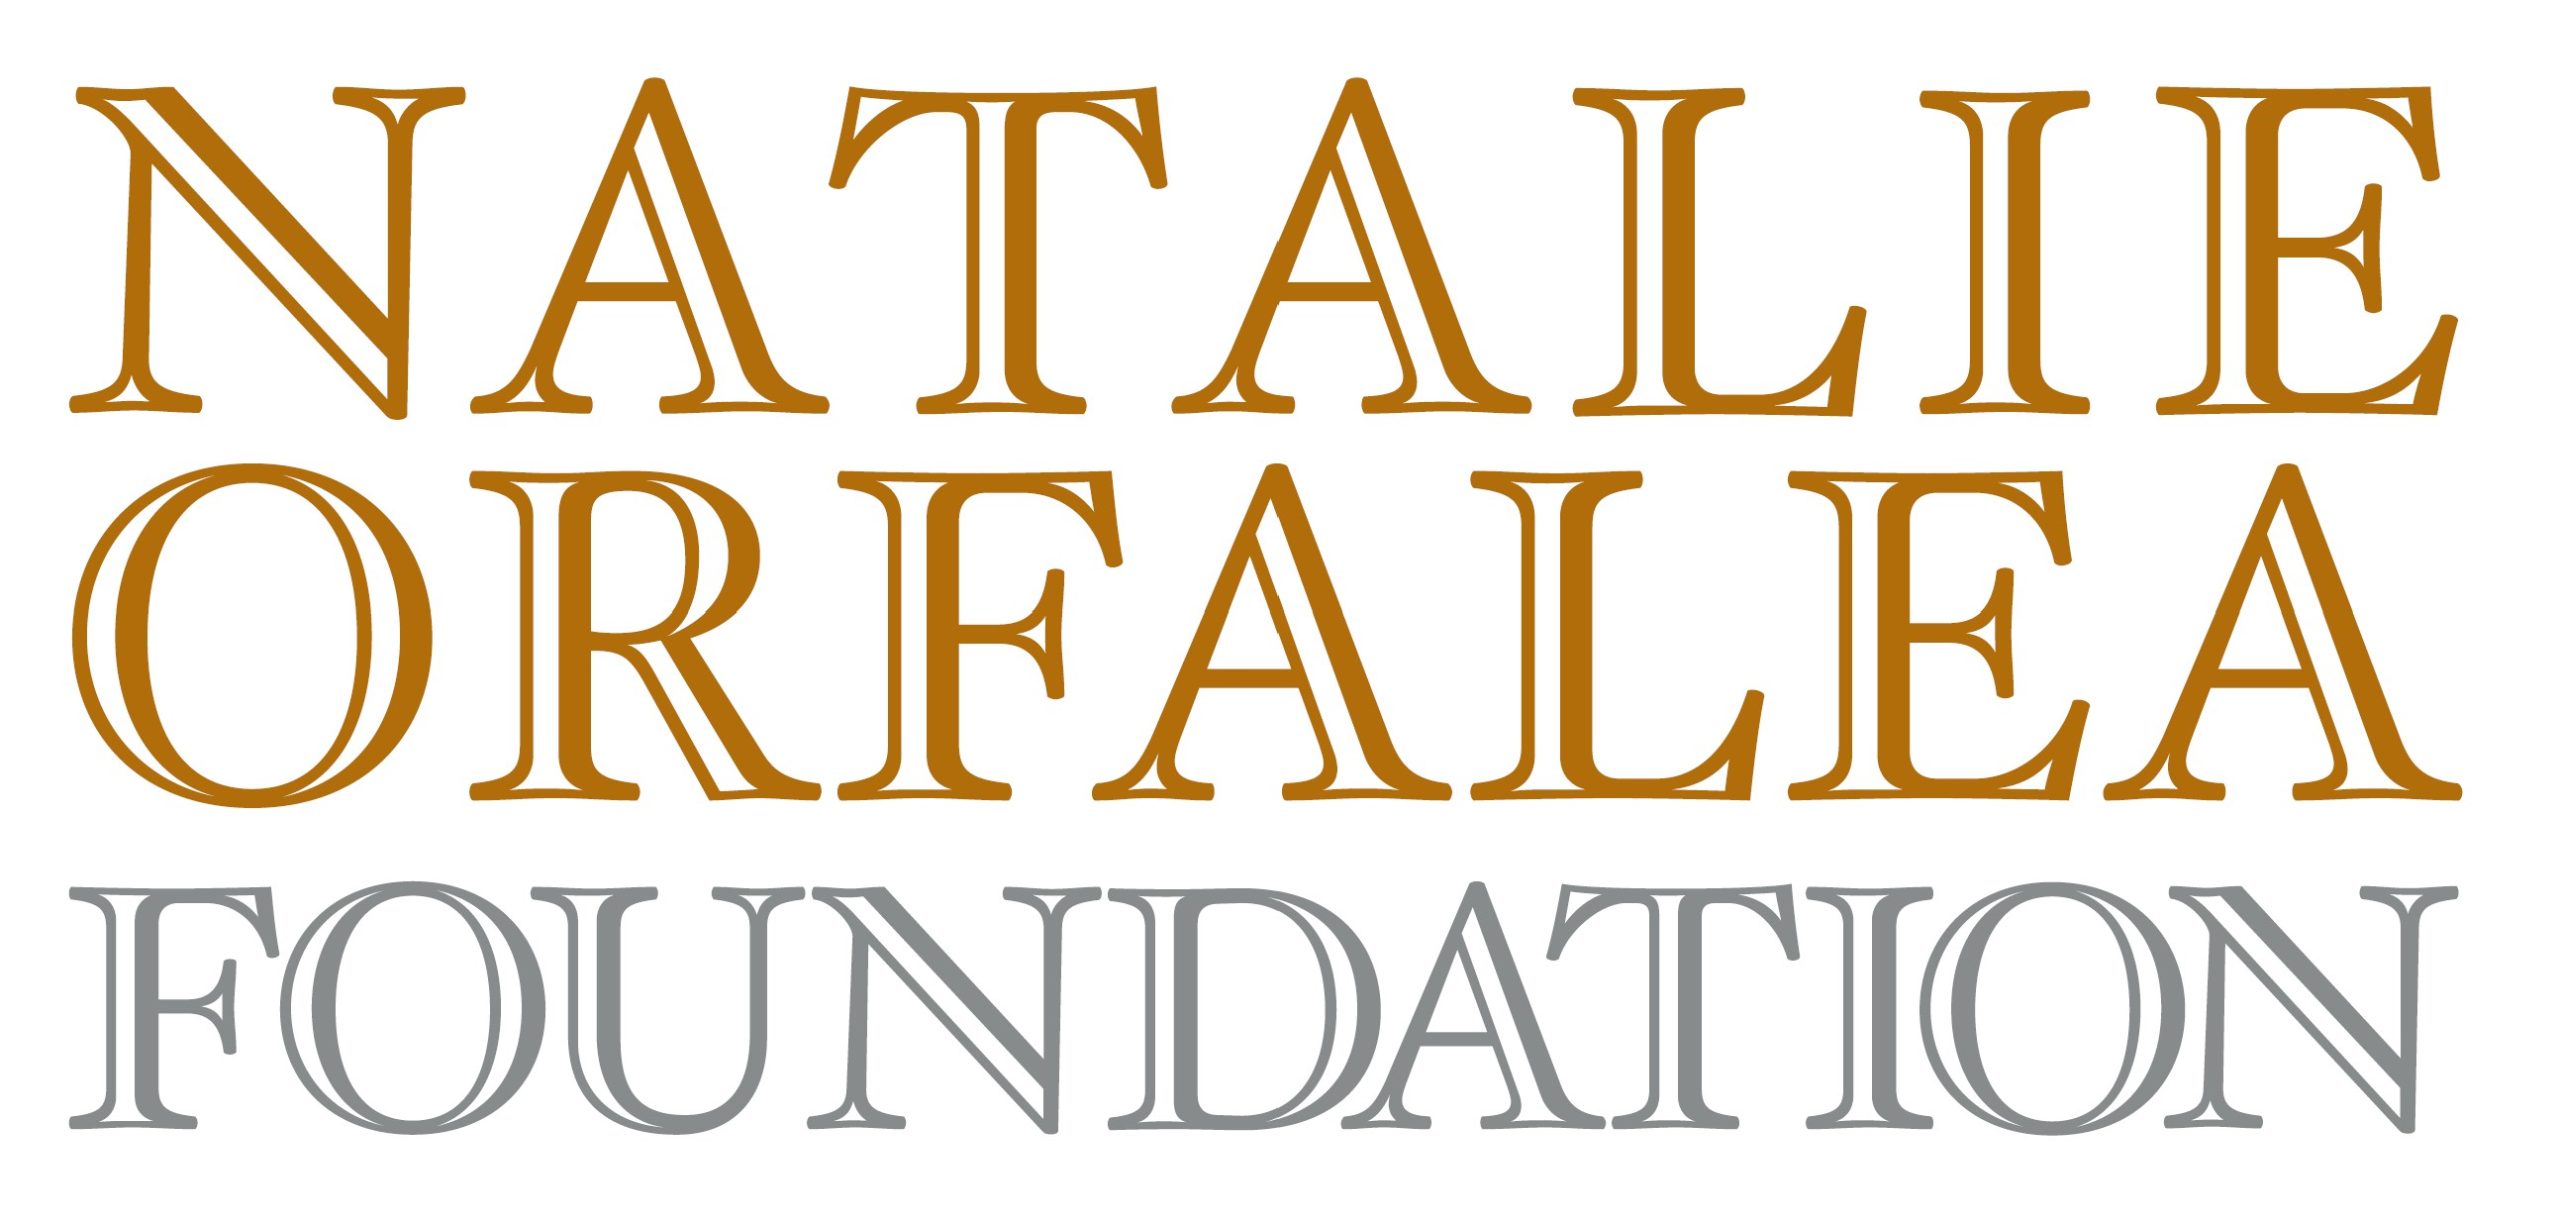 Natalie_Orfalea_Foundation